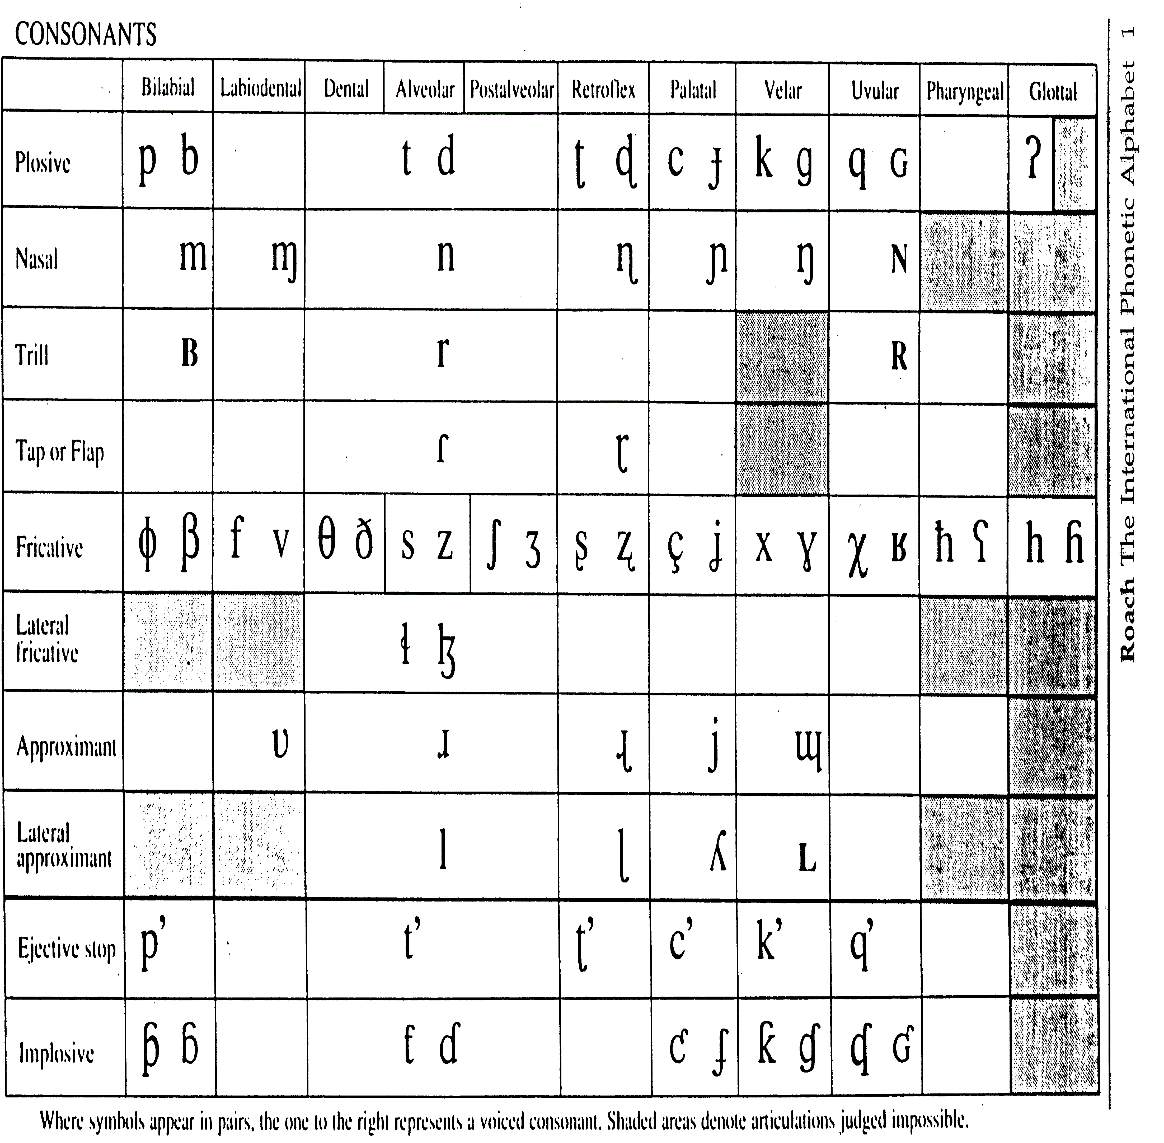 International Consonant System